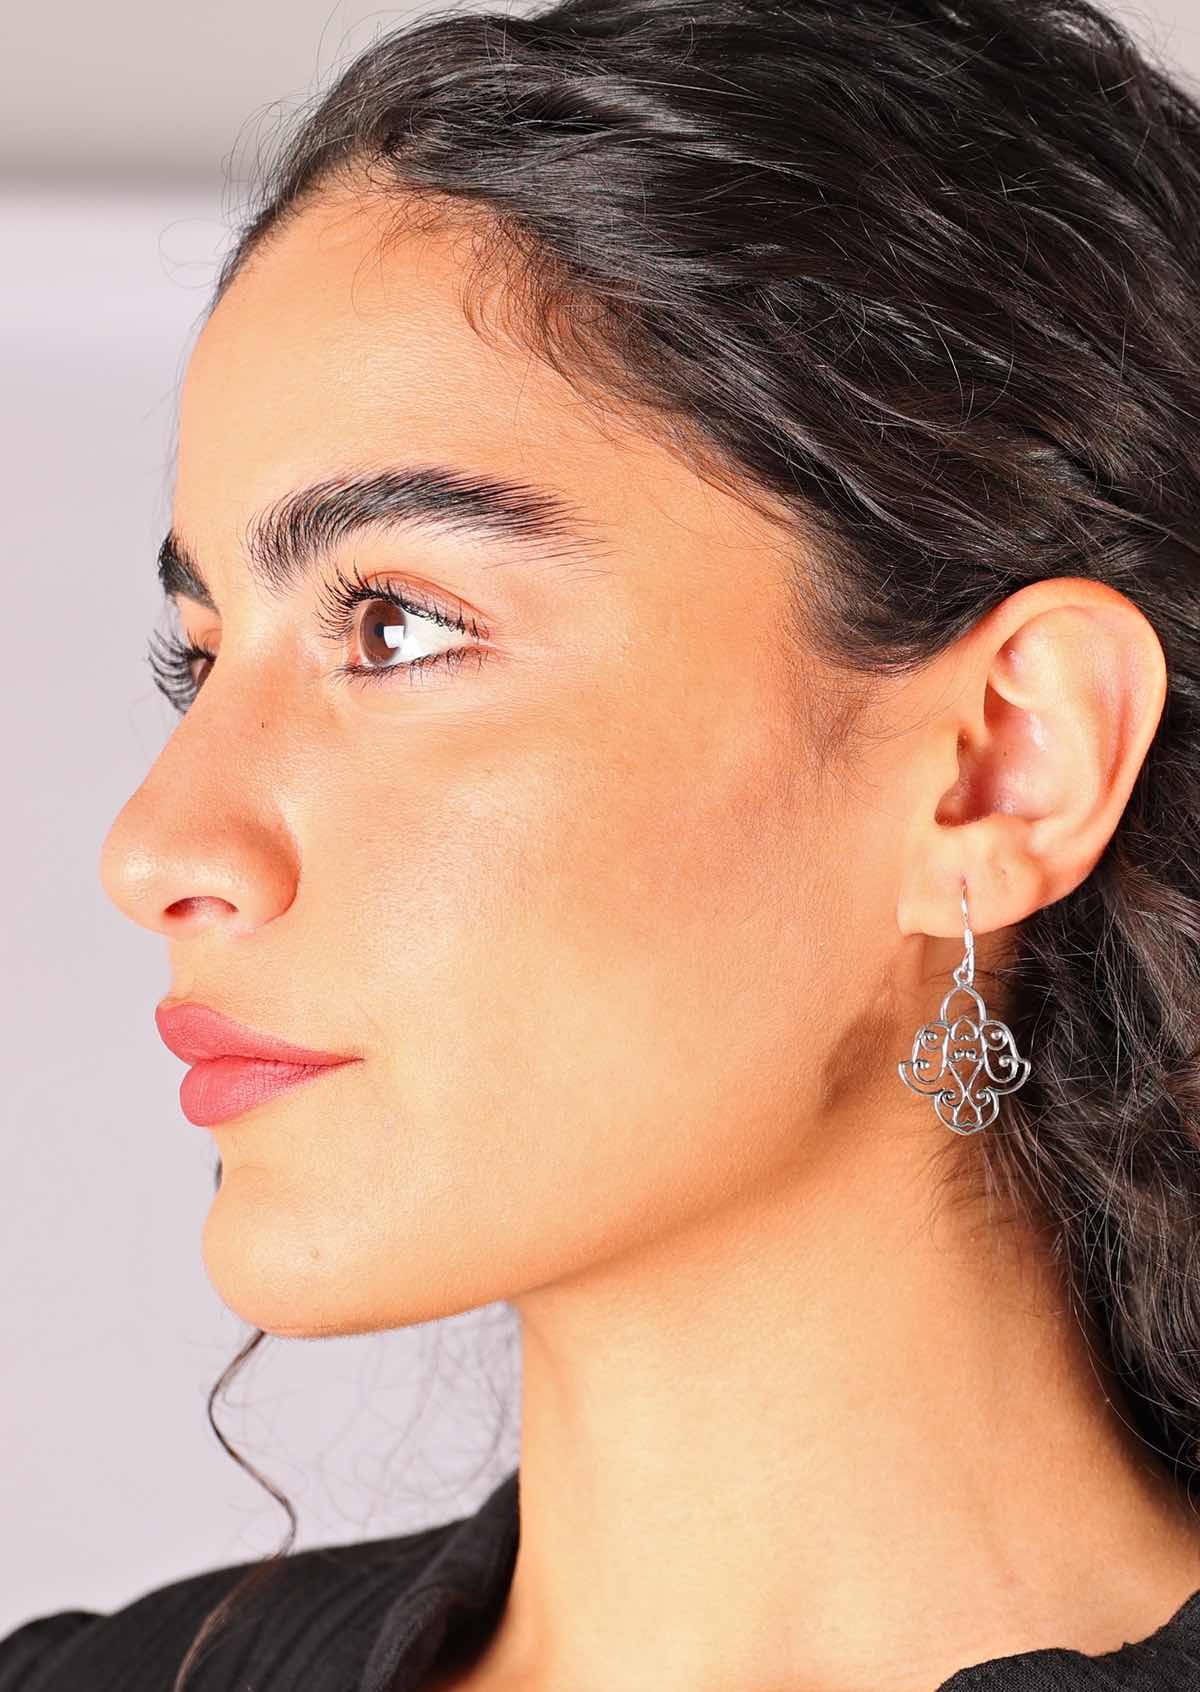 40mm long sterling silver hook earrings with gorgeous filigree window